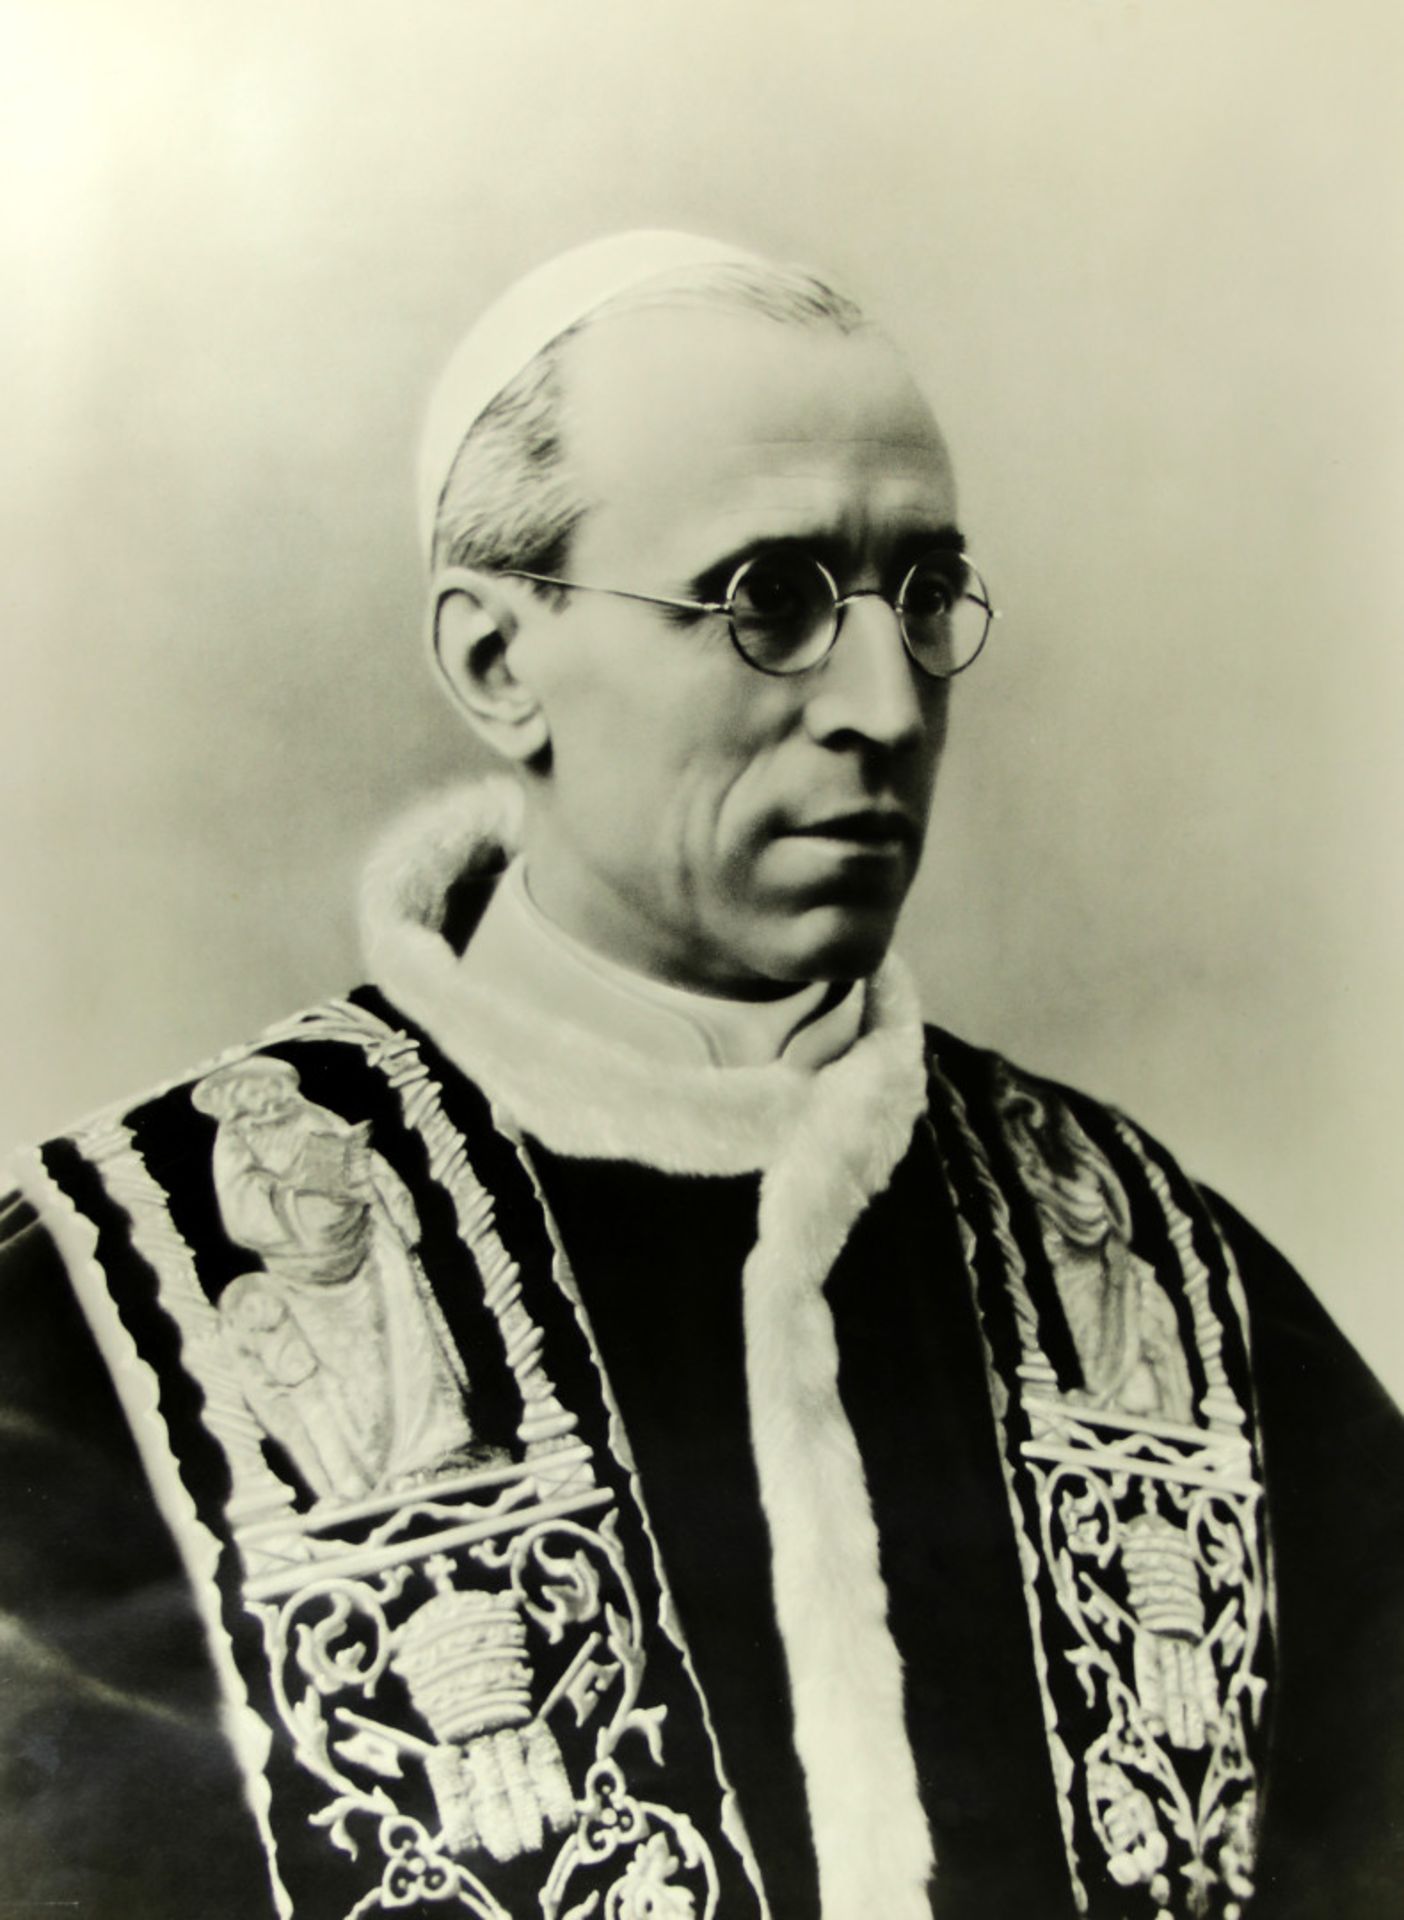 Fotografie. - Pius XII., Papst. - Porträt von Papst Pius XII. Brustbild. Original-Fotografie. Mit